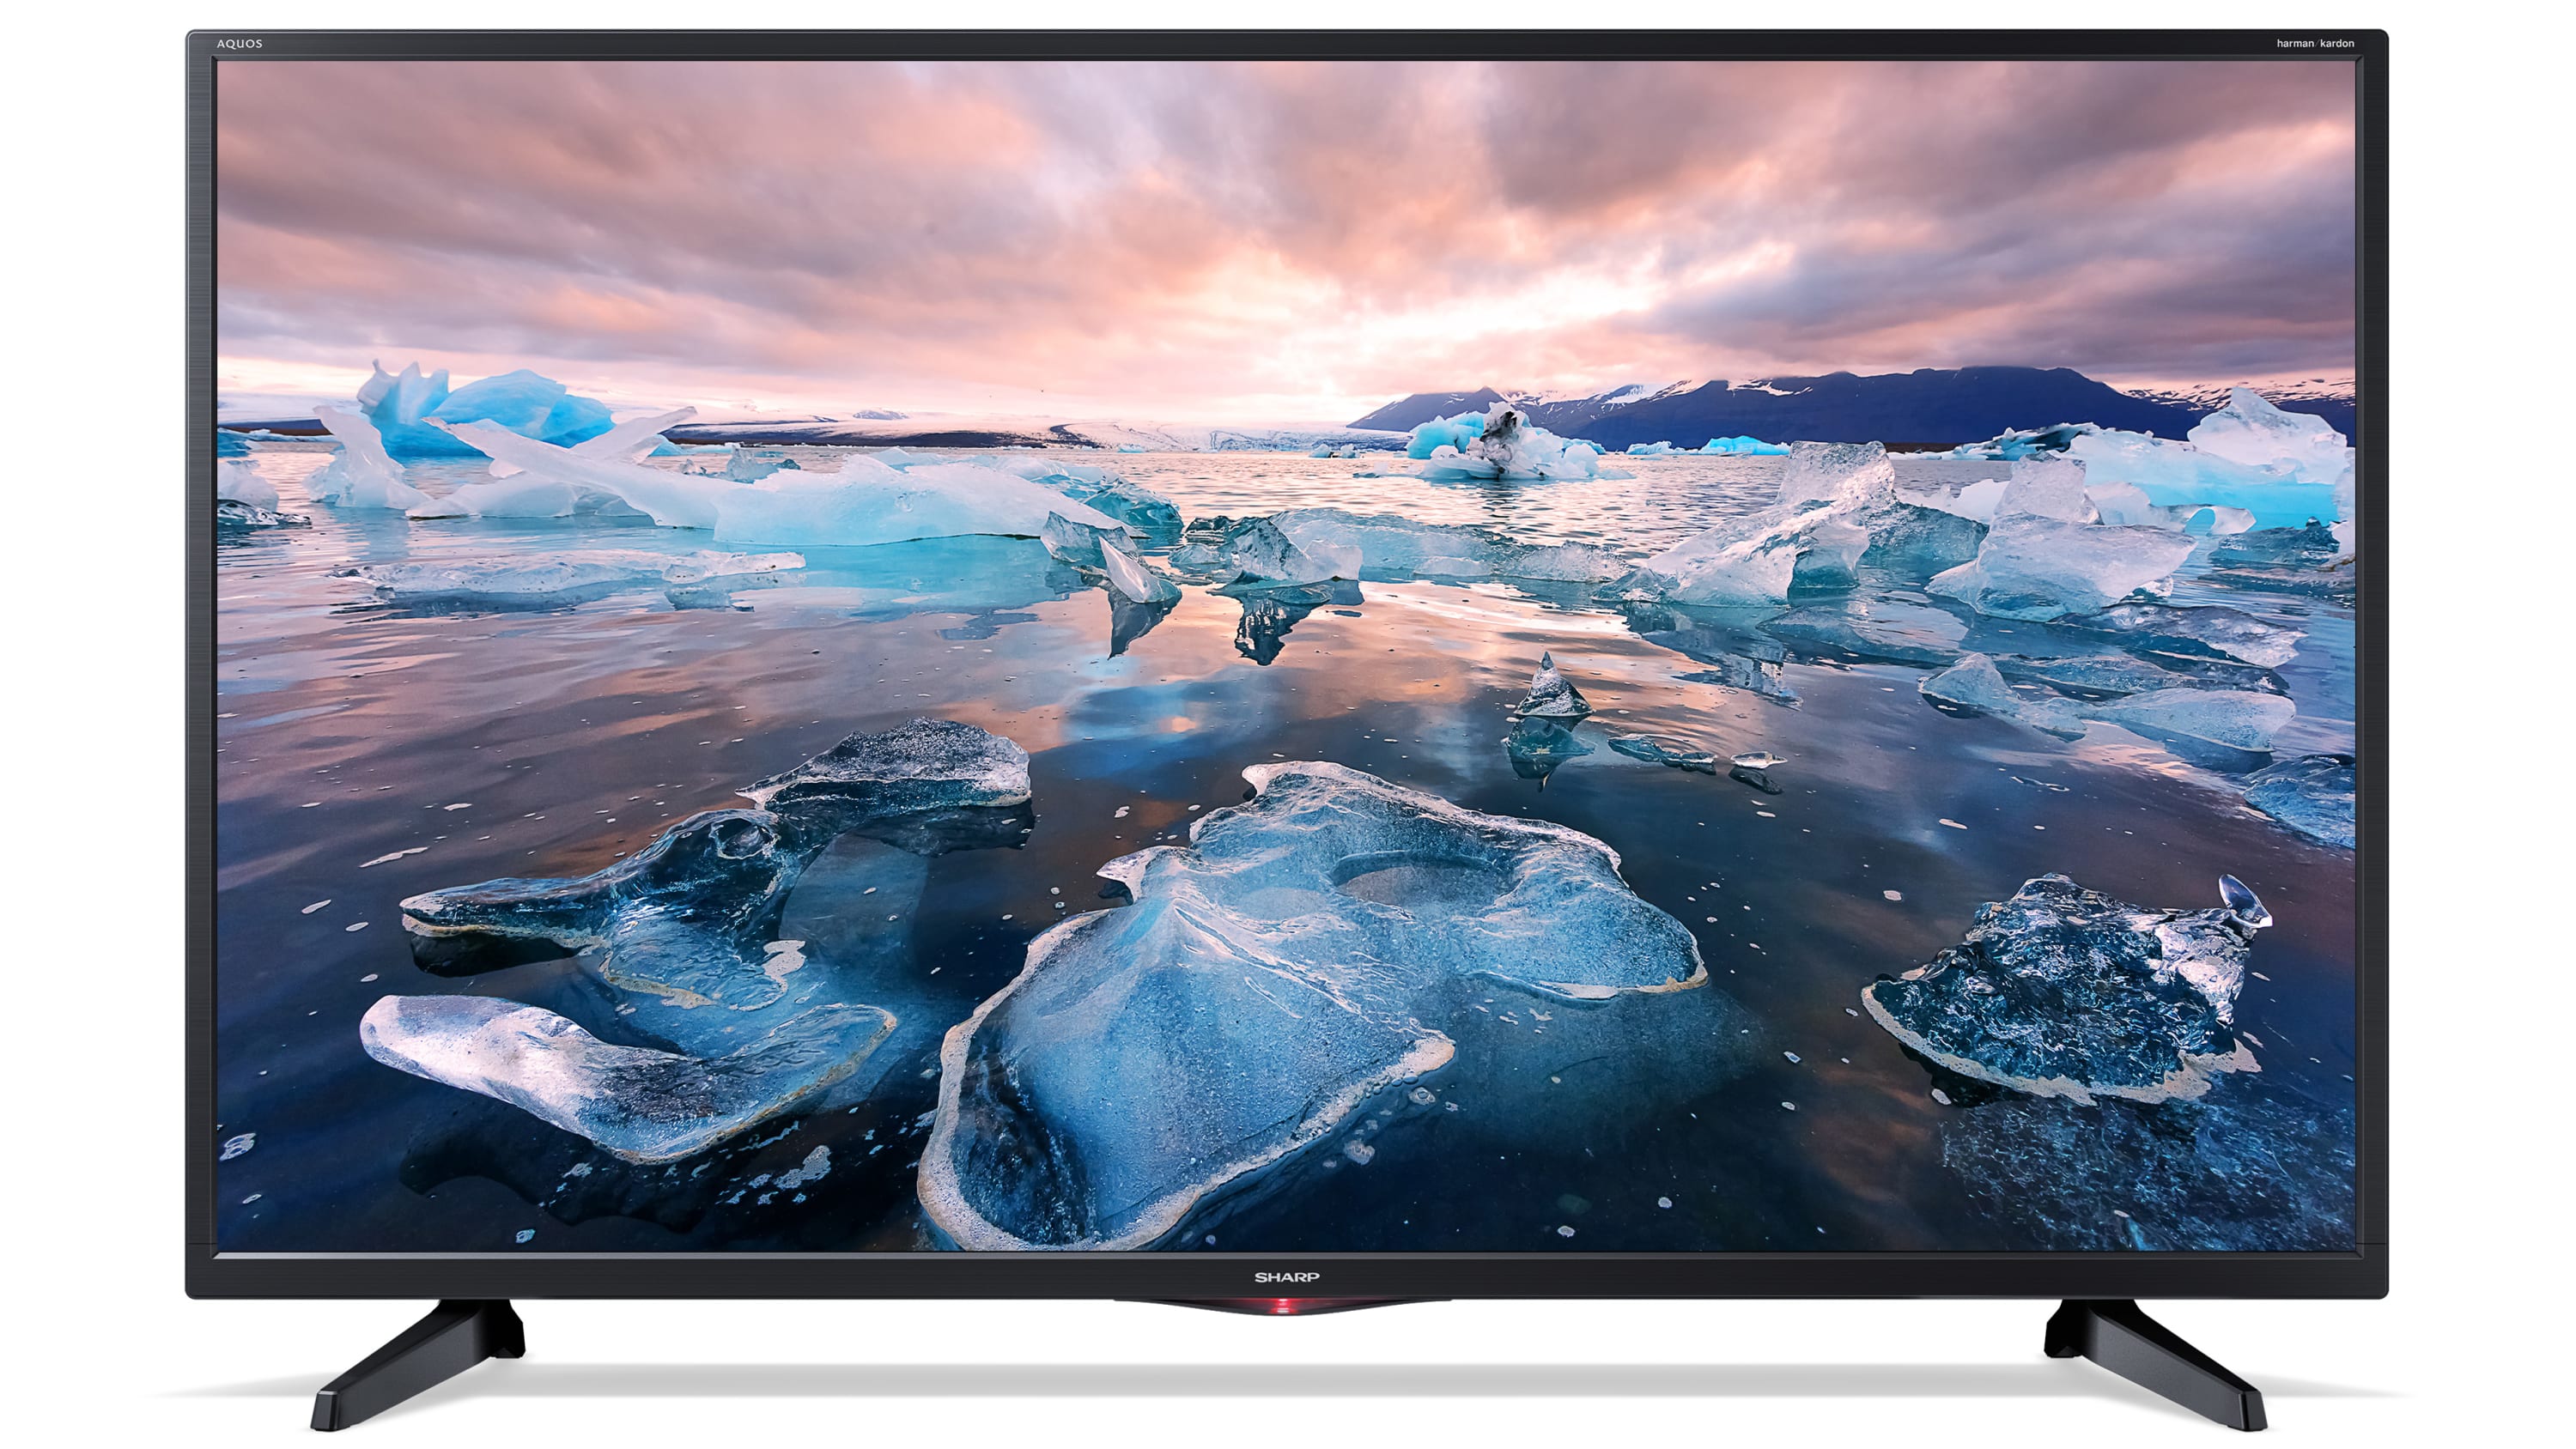 Smart TV HD/Full HD - 